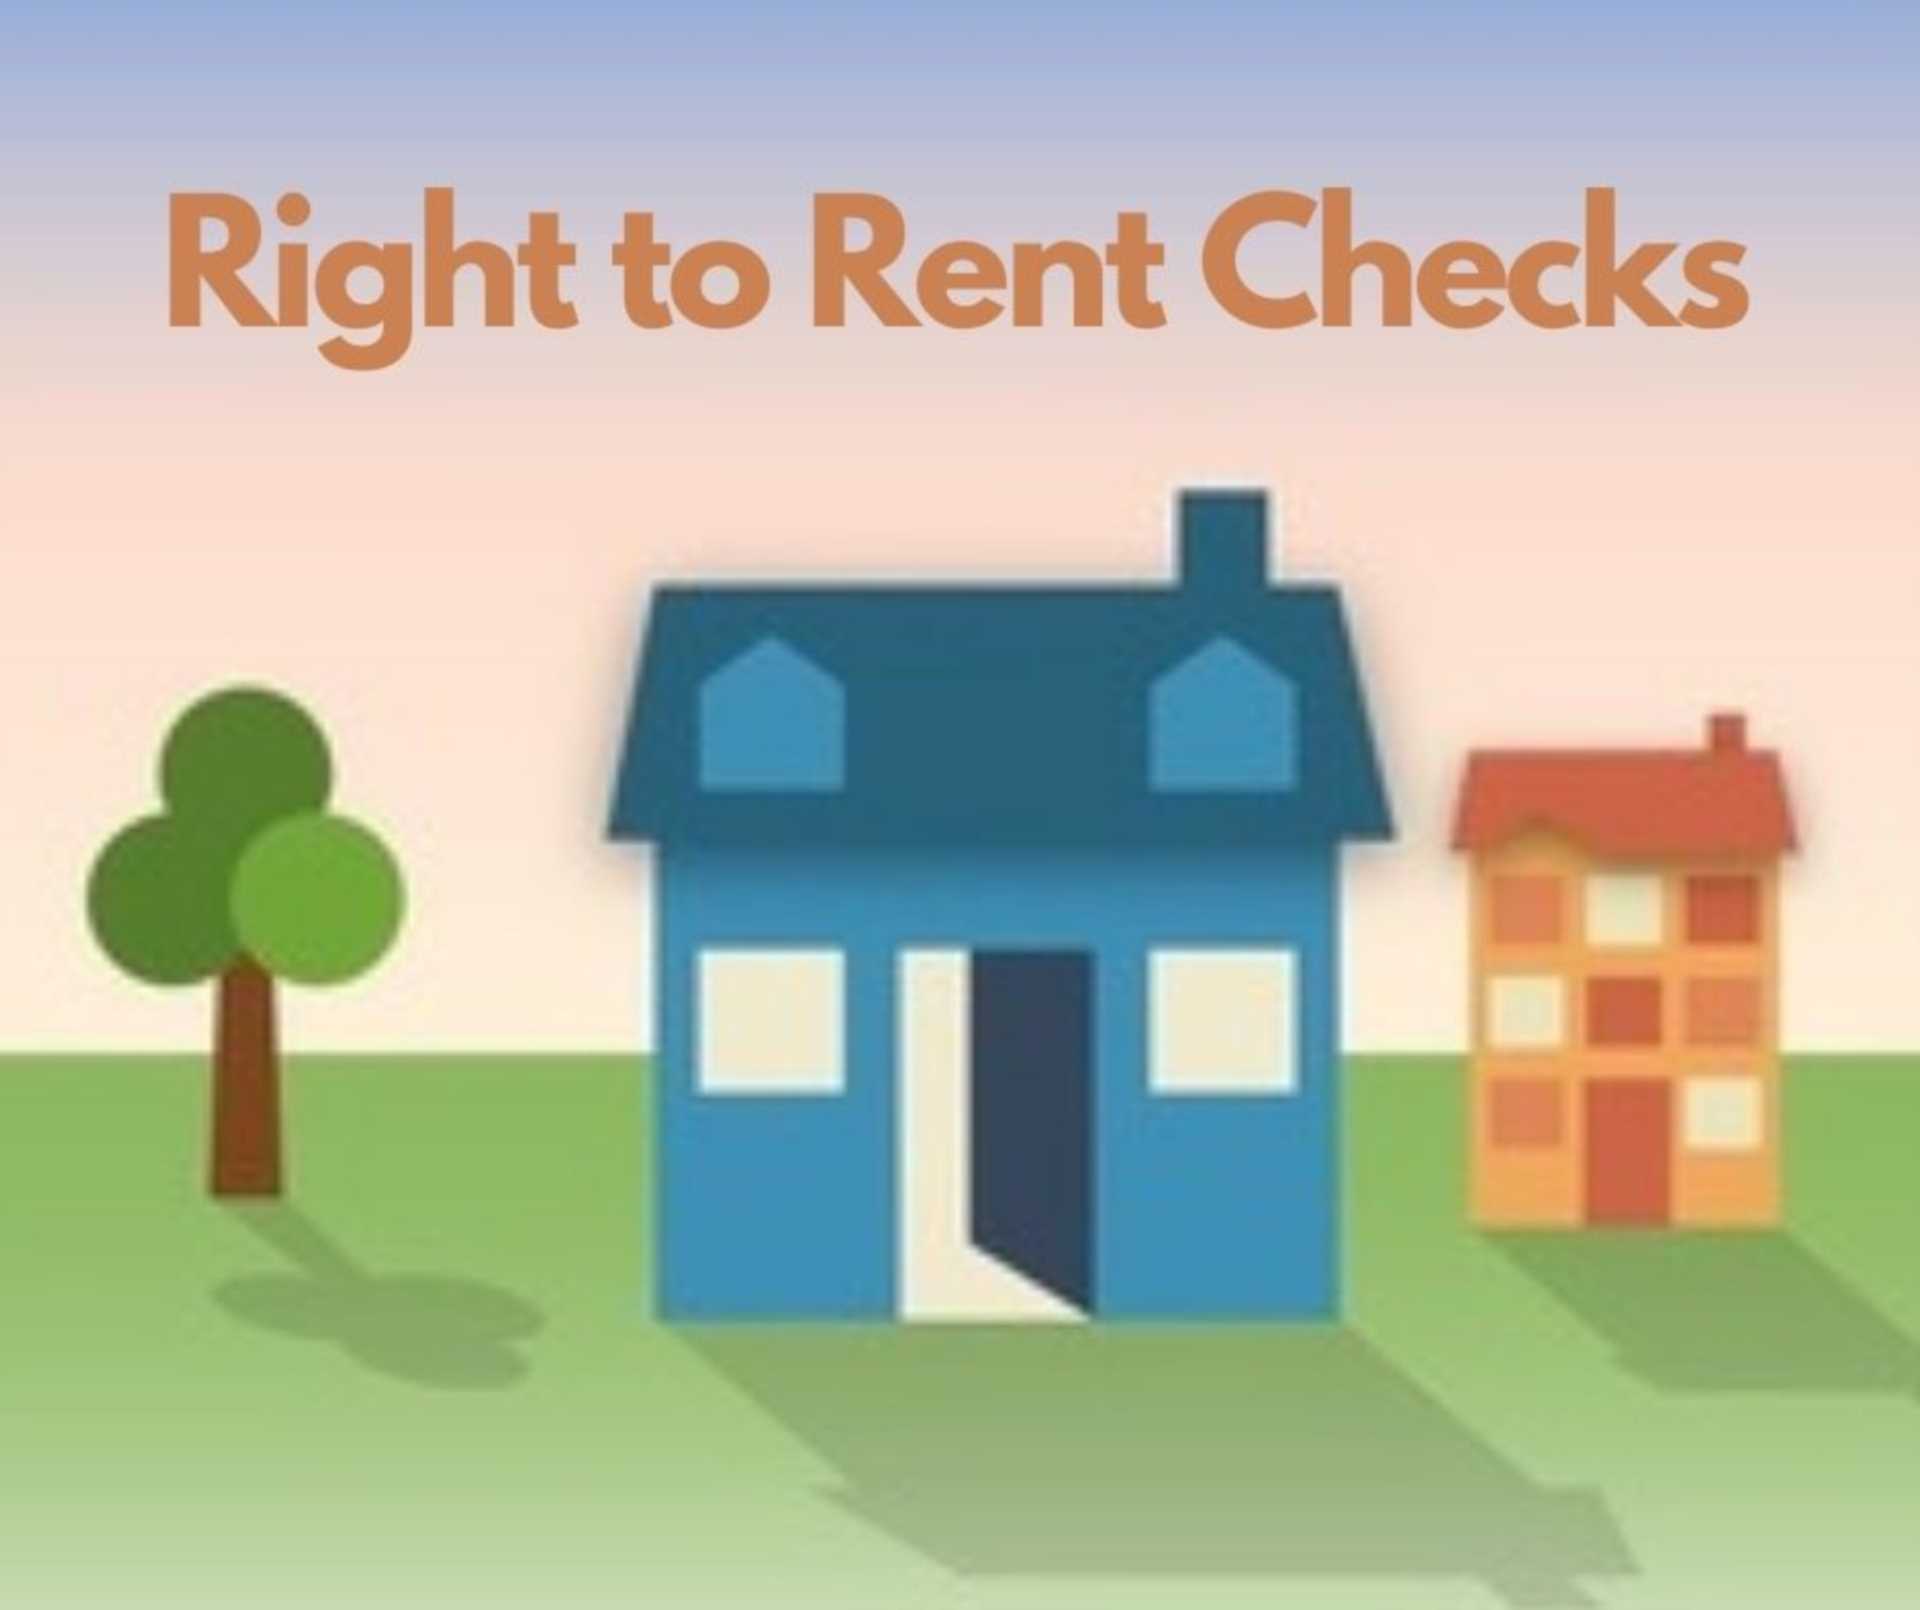 New Legislation on Right to Rent Checks